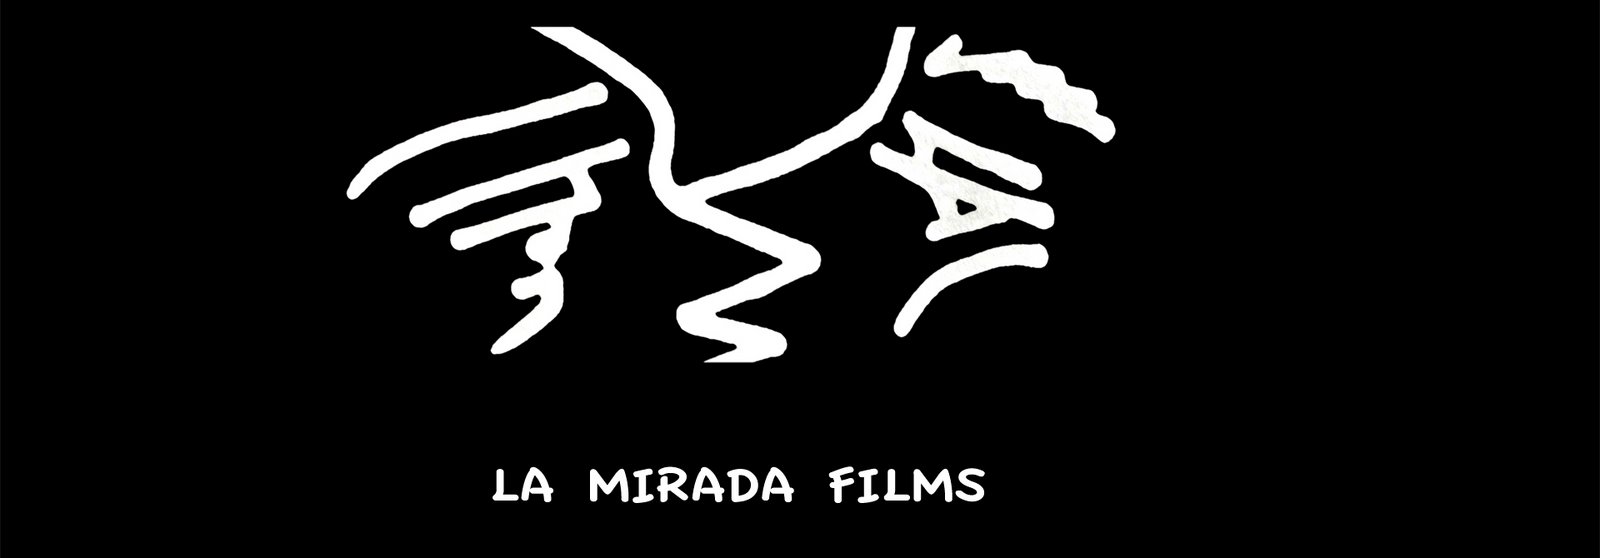 LA MIRADA FILMS